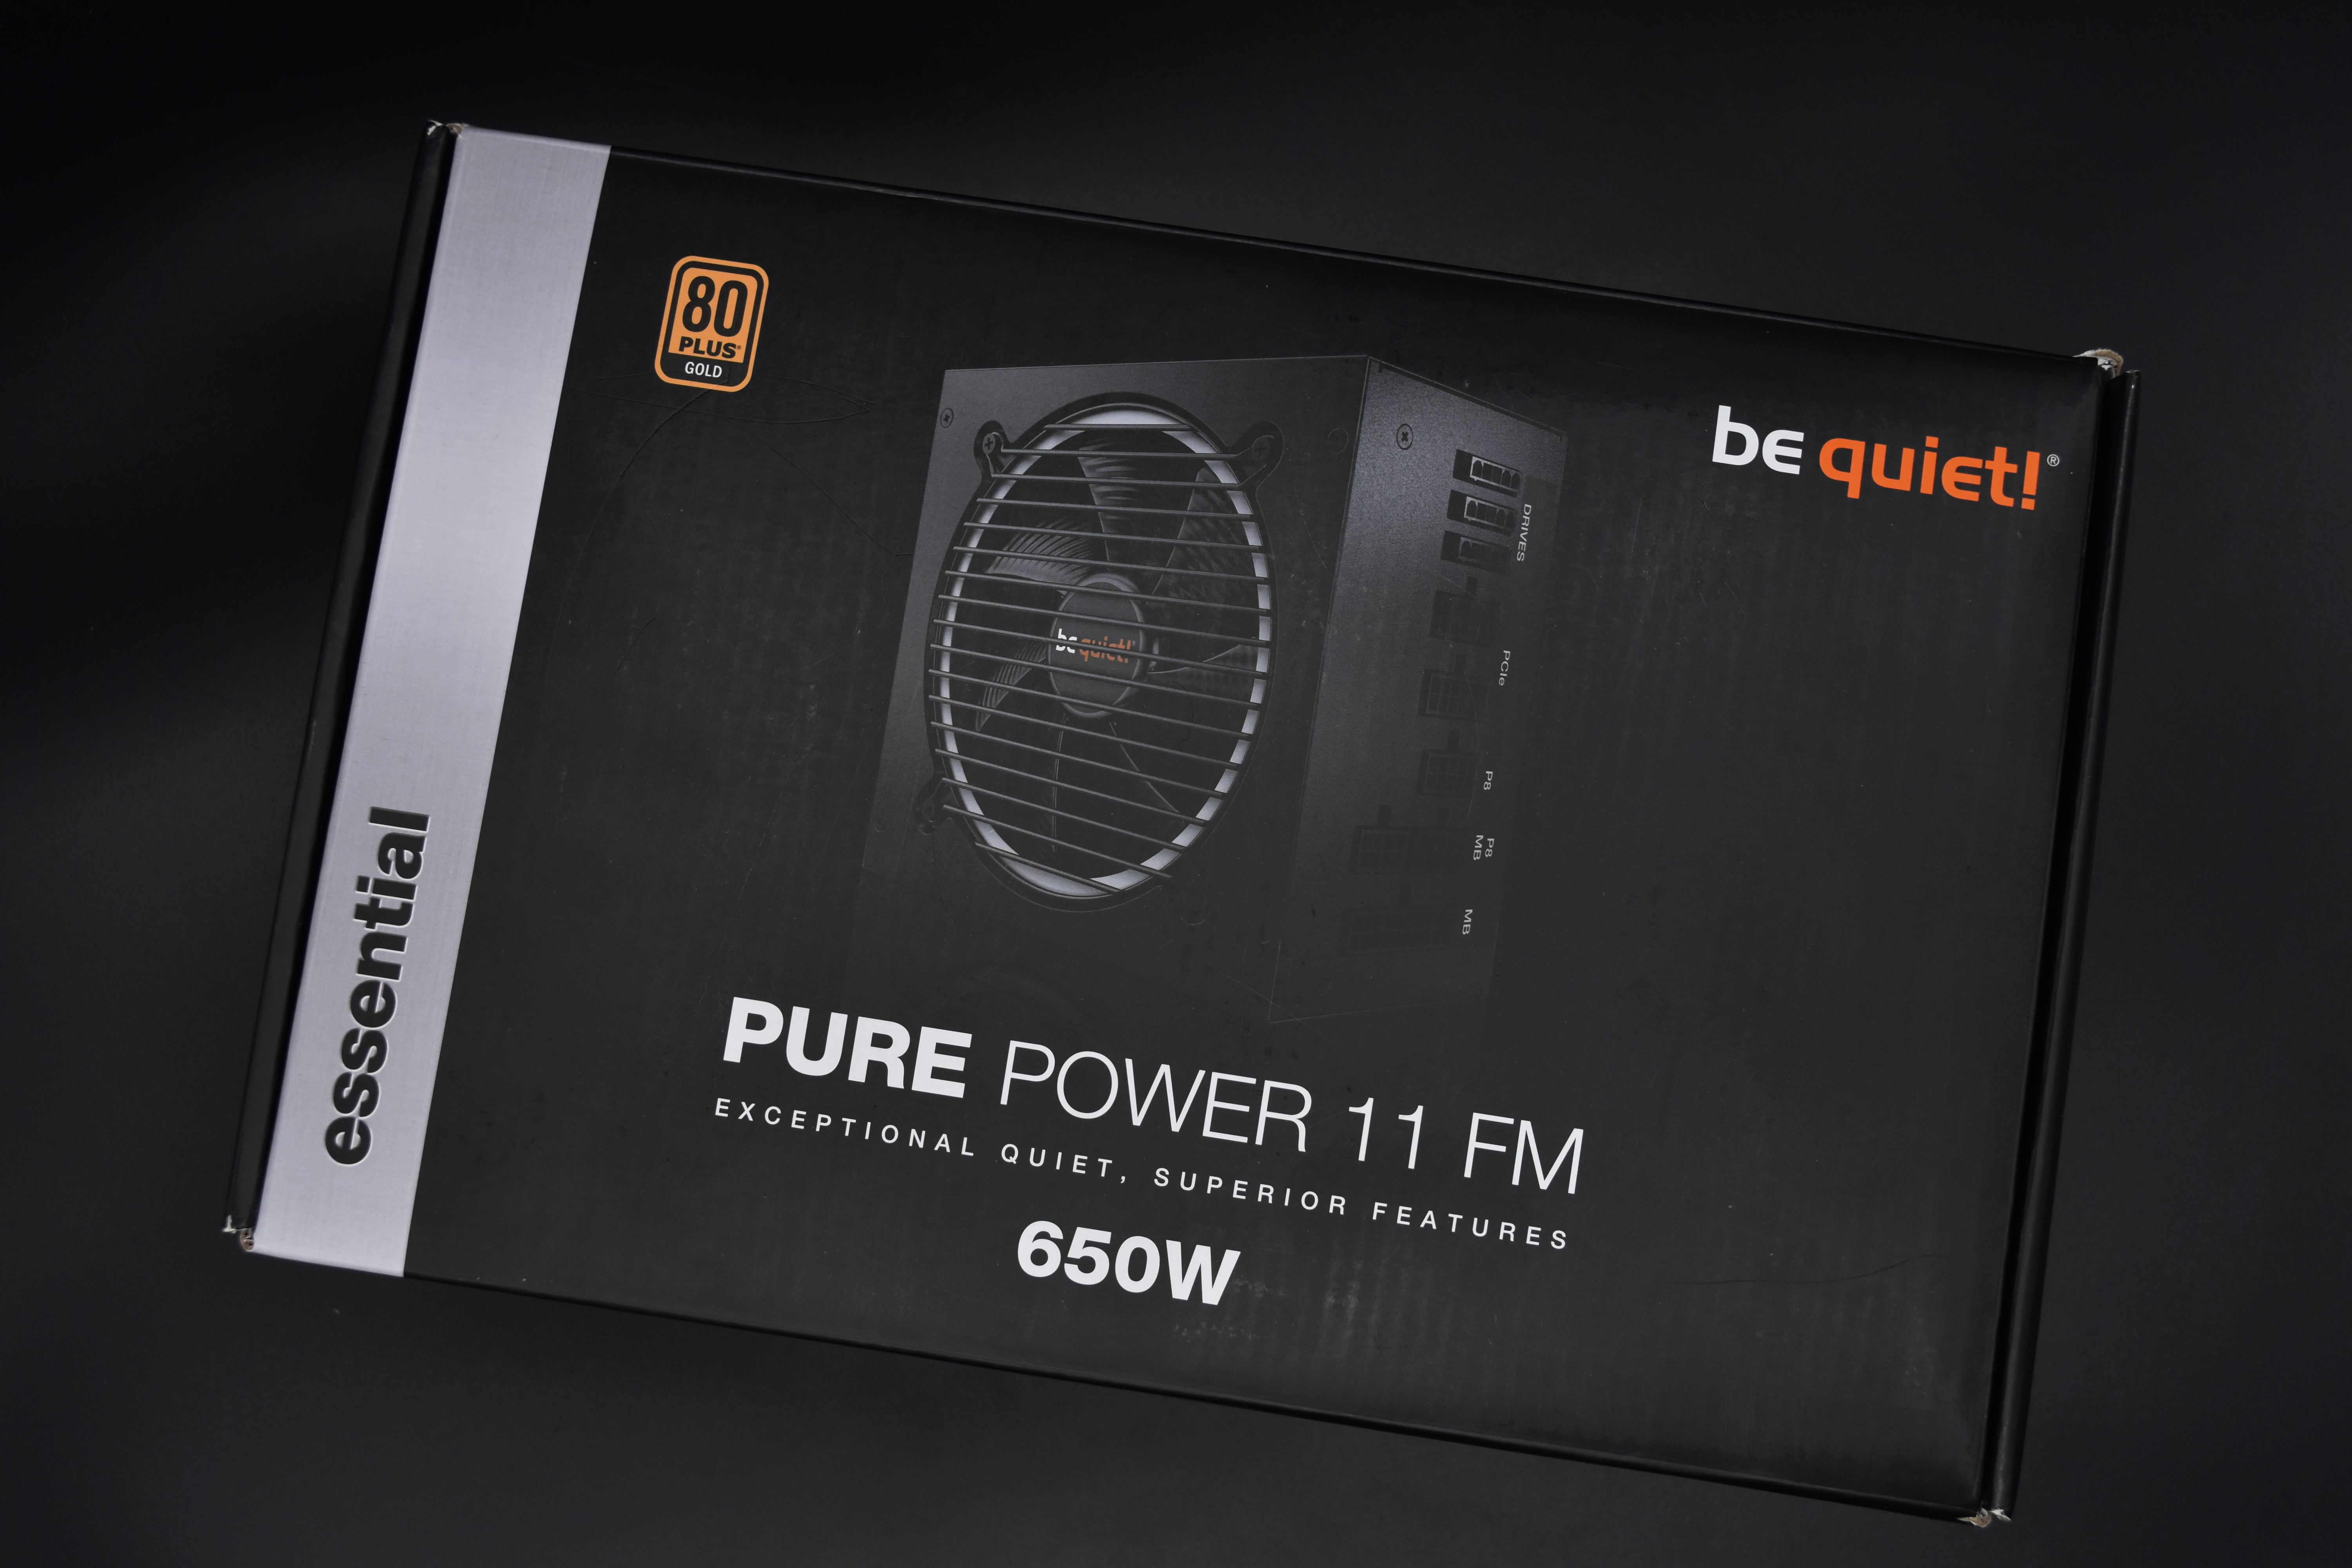 Fm 650. Be quiet! Pure Power 11 fm 650w. Блок питания be quiet! 1000w Pure Power 11 fm bn325. Блок питания be quiet! Pure Power 11 fm 650w Gold ATX bn318. Be quiet! Pure Power 12 m fm [bn345].